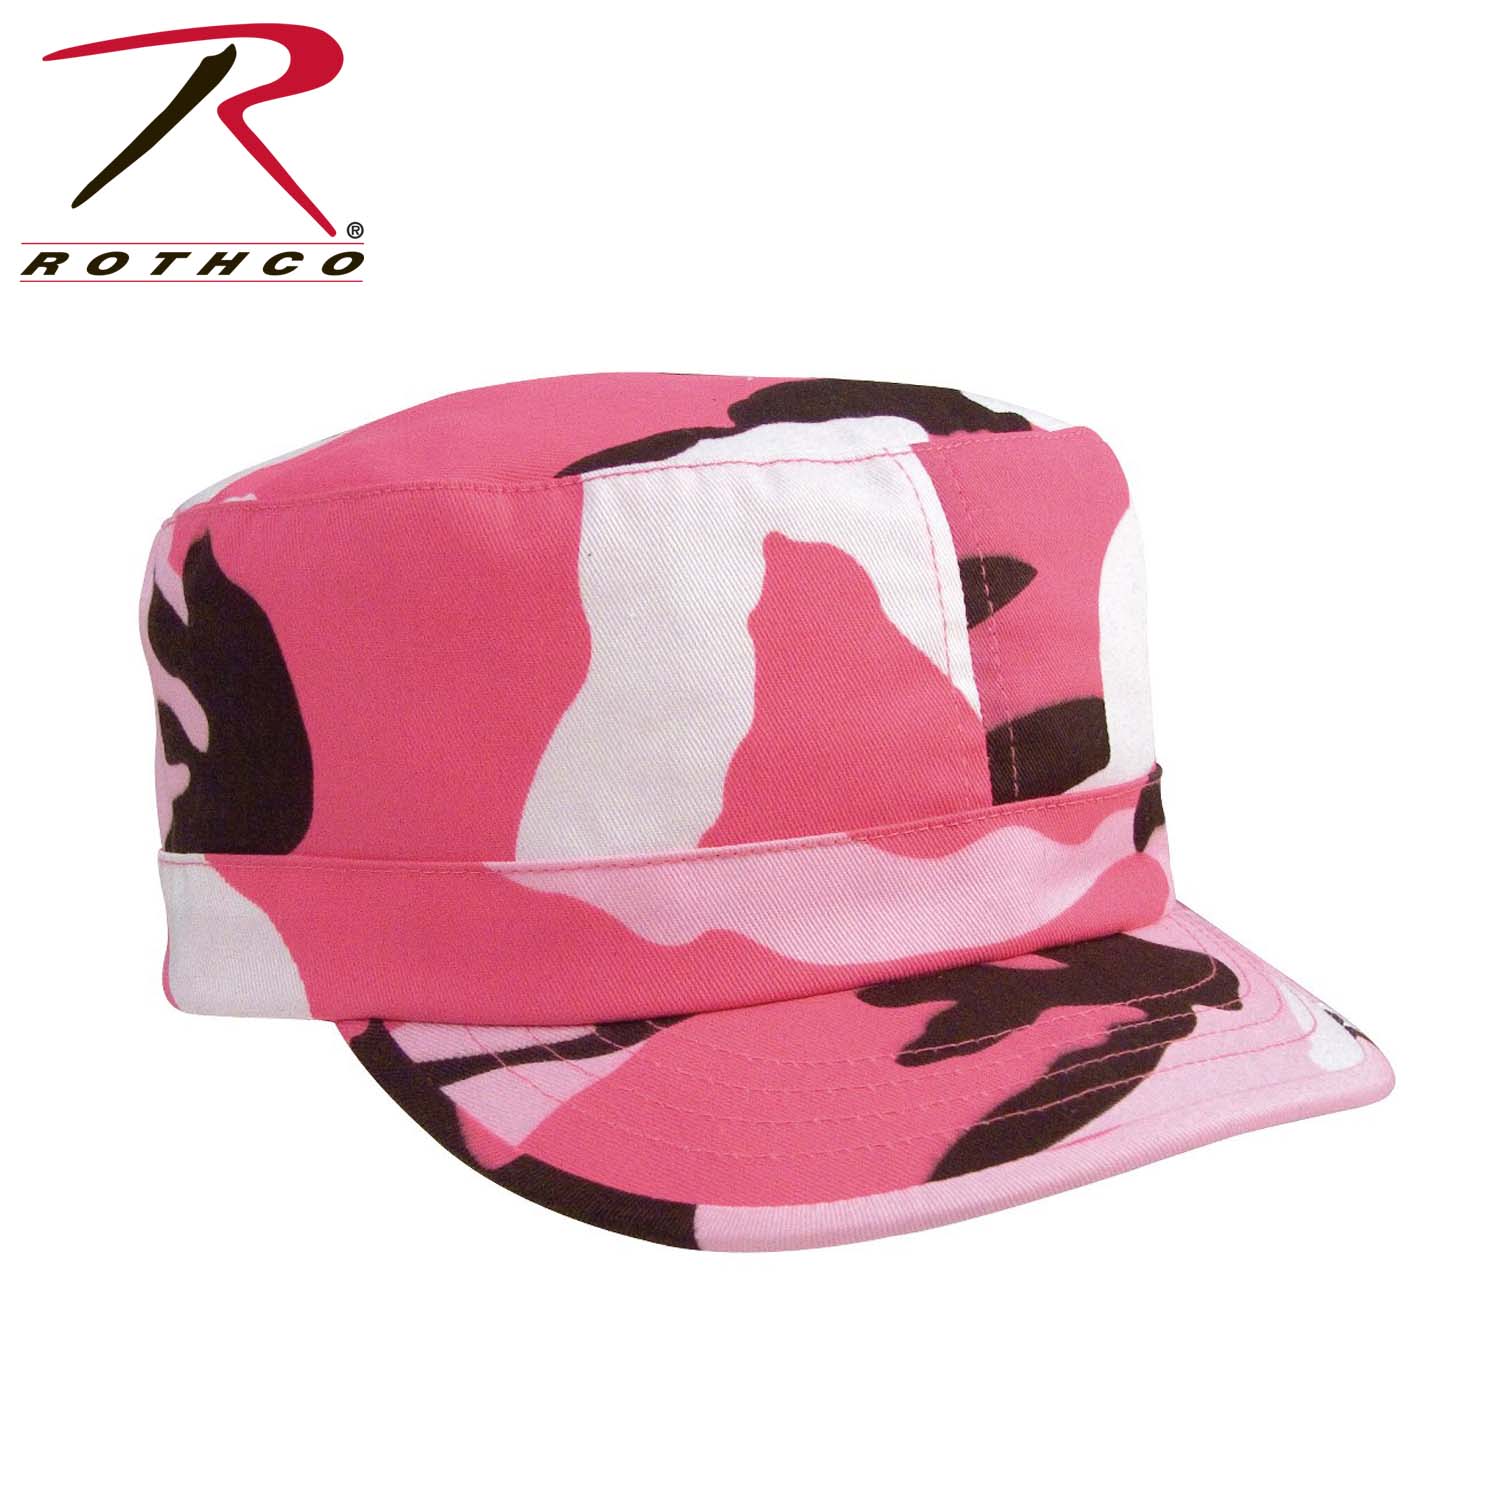 Ball Cap-Women's Pink/Pink Camo Adjustable Fatigue Cap